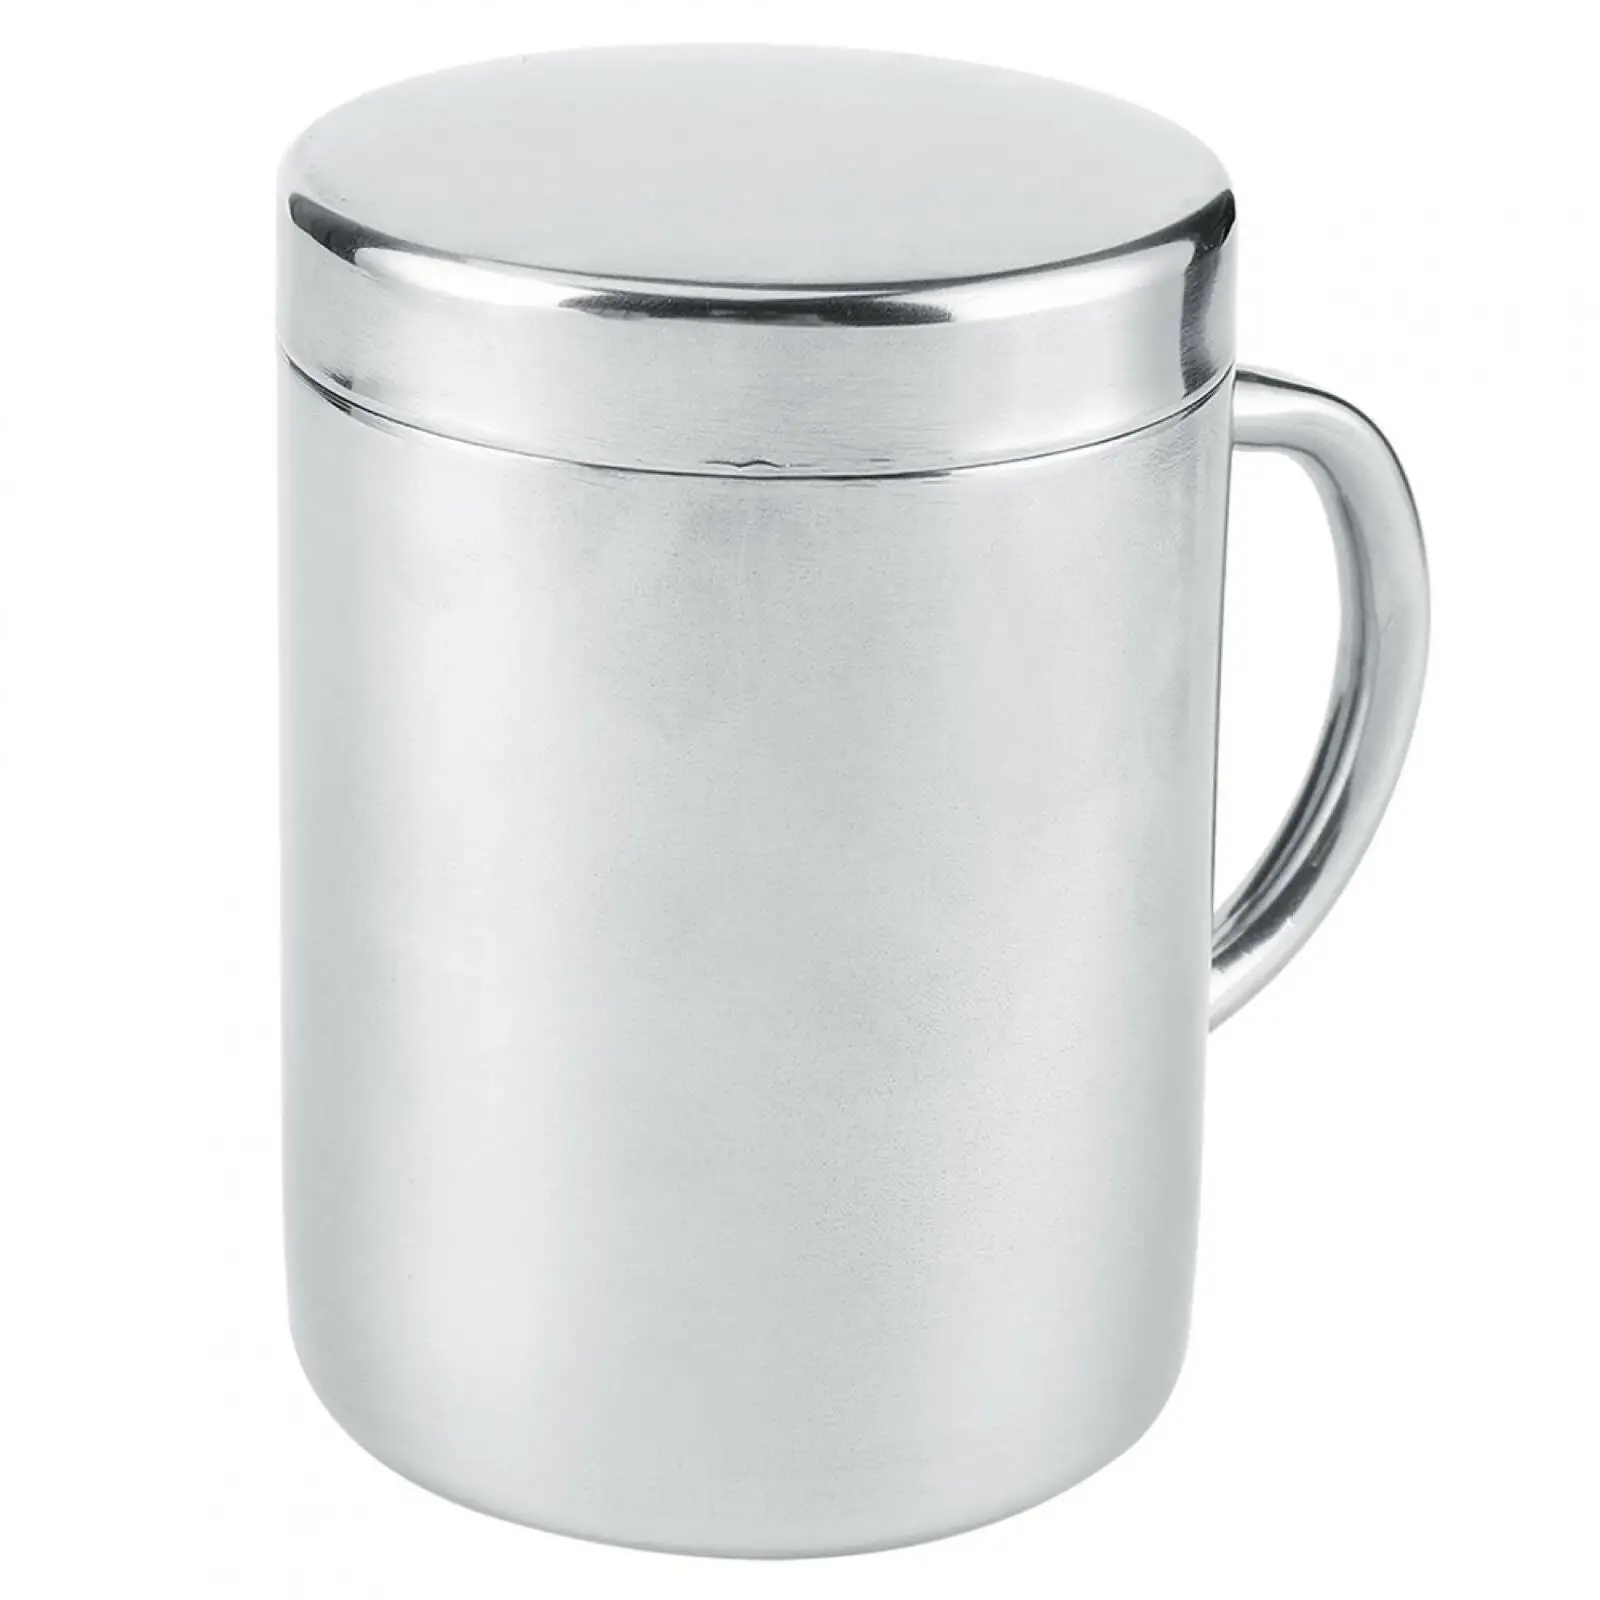 Set Of 2 Mirror Polished Coffee Mug Round Shape Kitchenware Tea and Coffee Mugs Restaurant Tableware Mugs and Cups